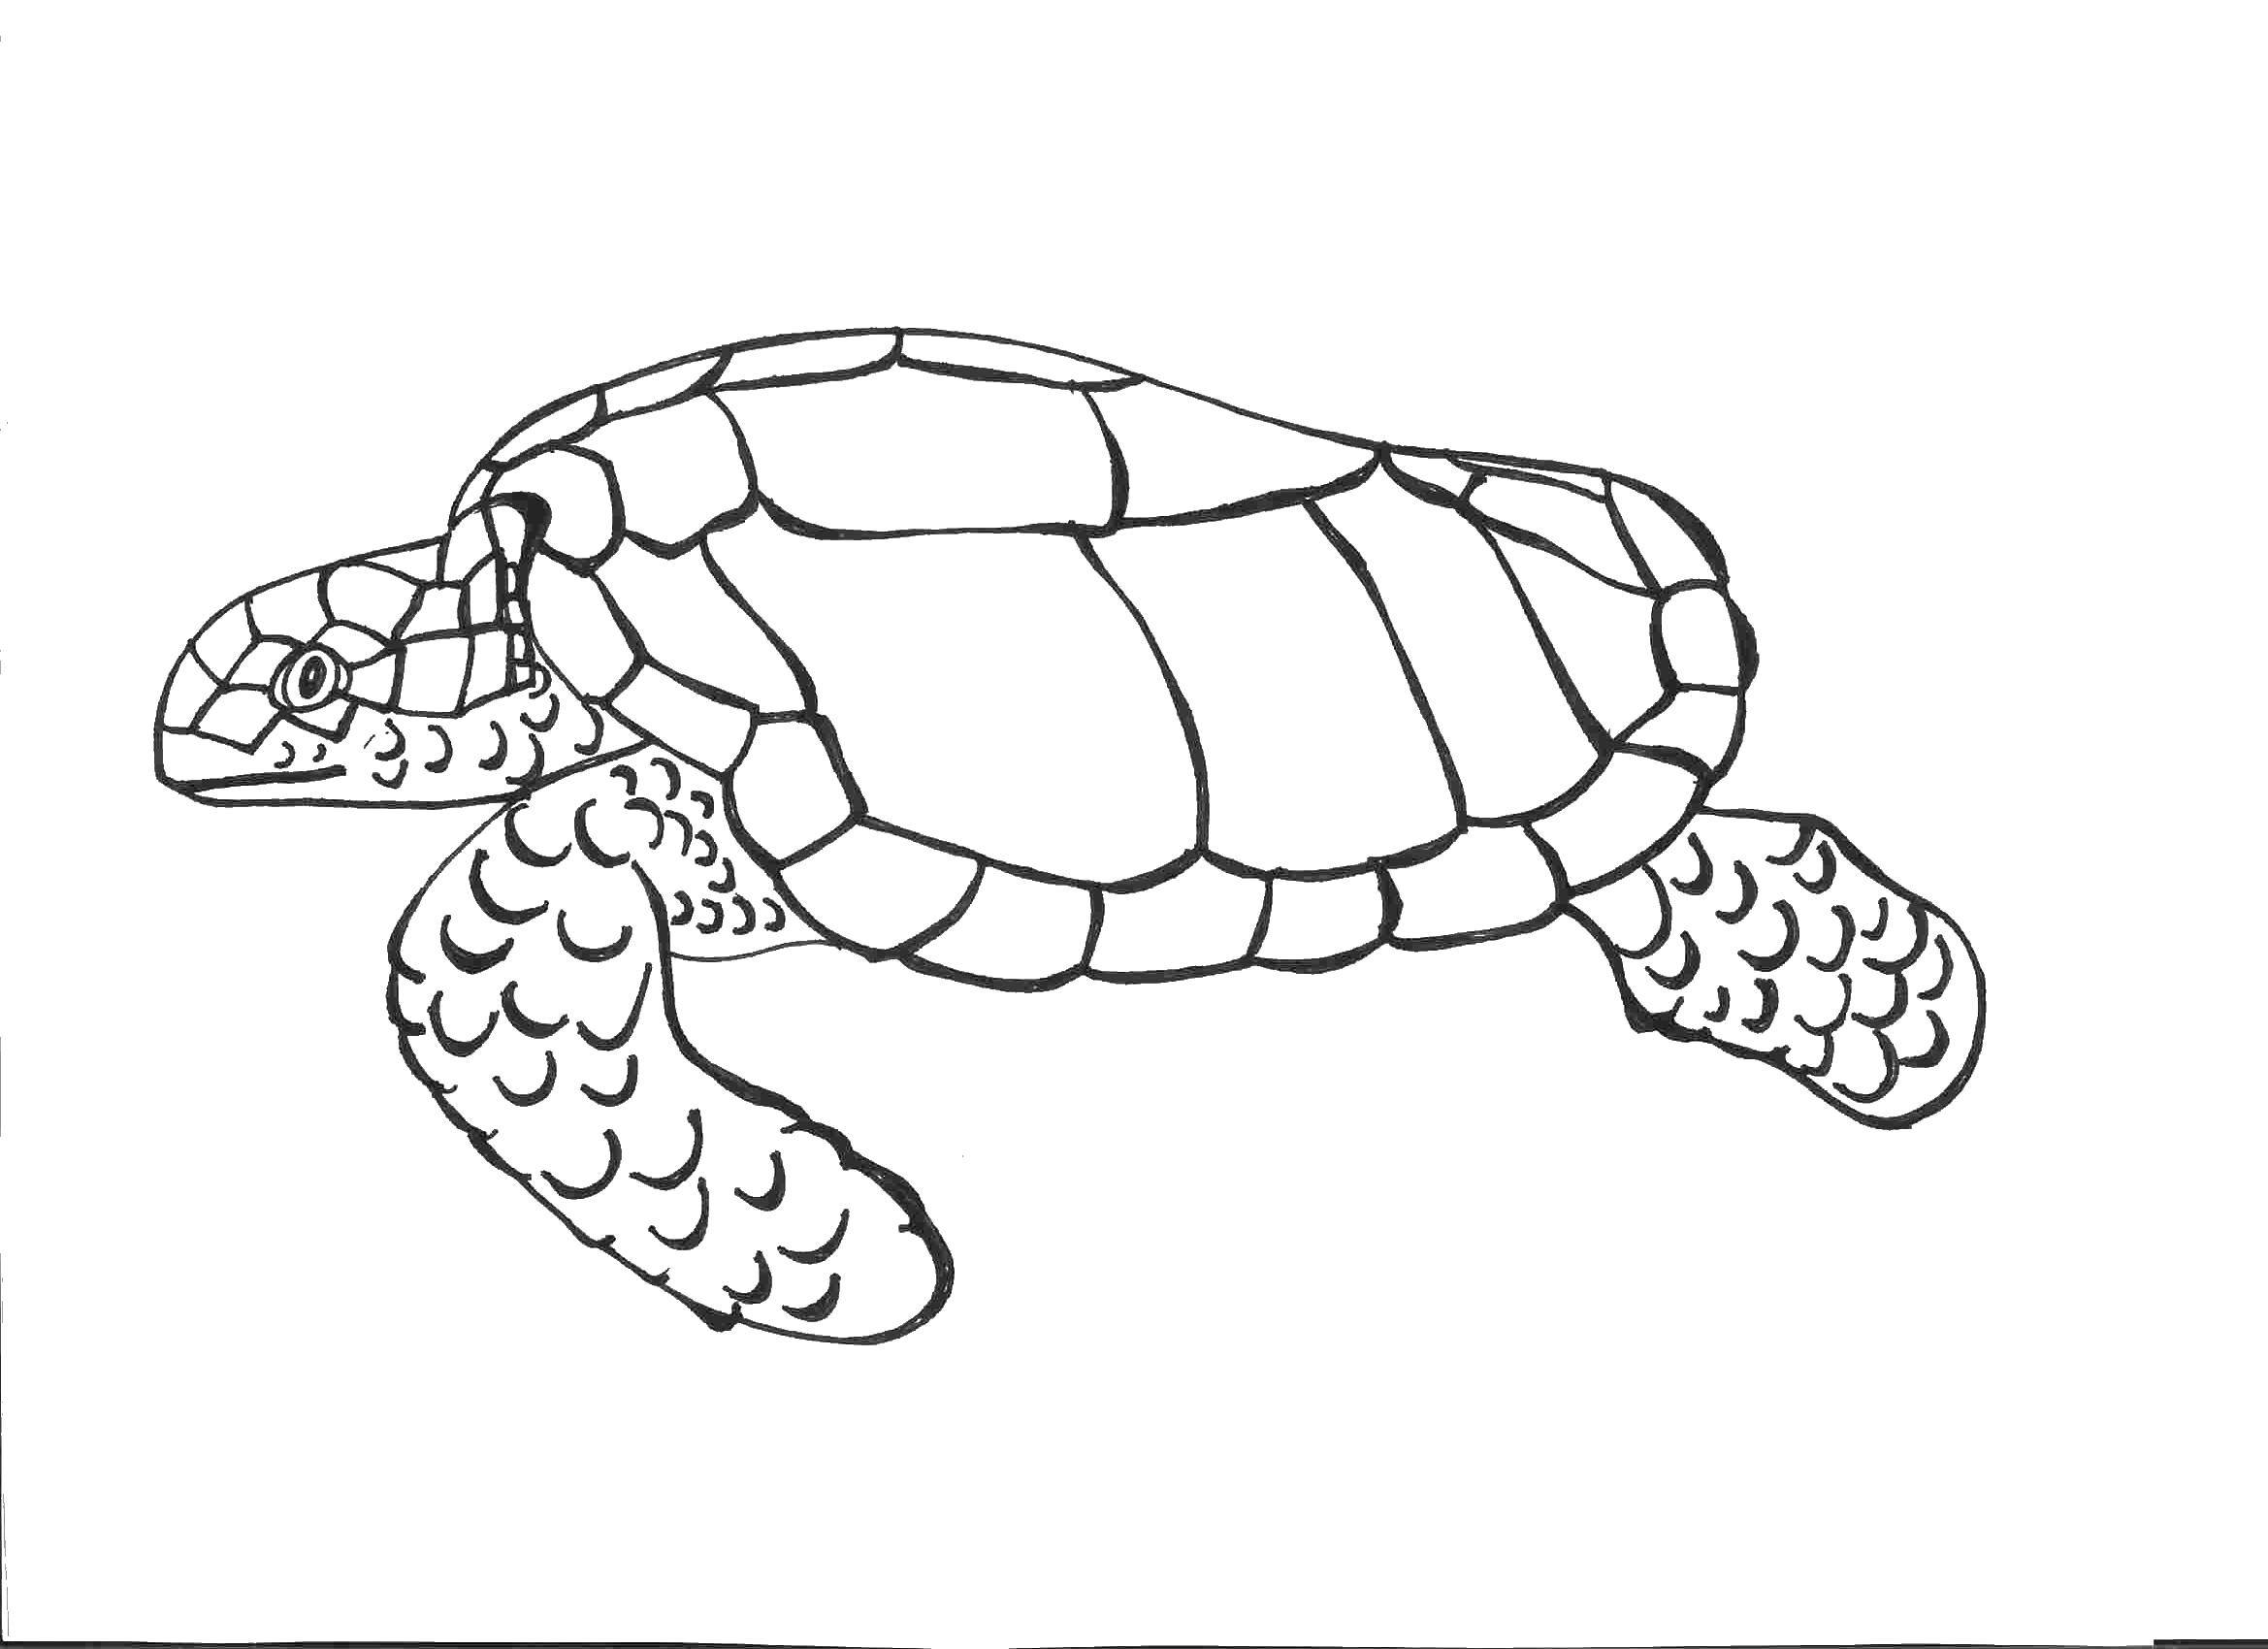 Название: Раскраска Старая морская черепаха. Категория: Морская черепаха. Теги: Рептилия, черепаха.